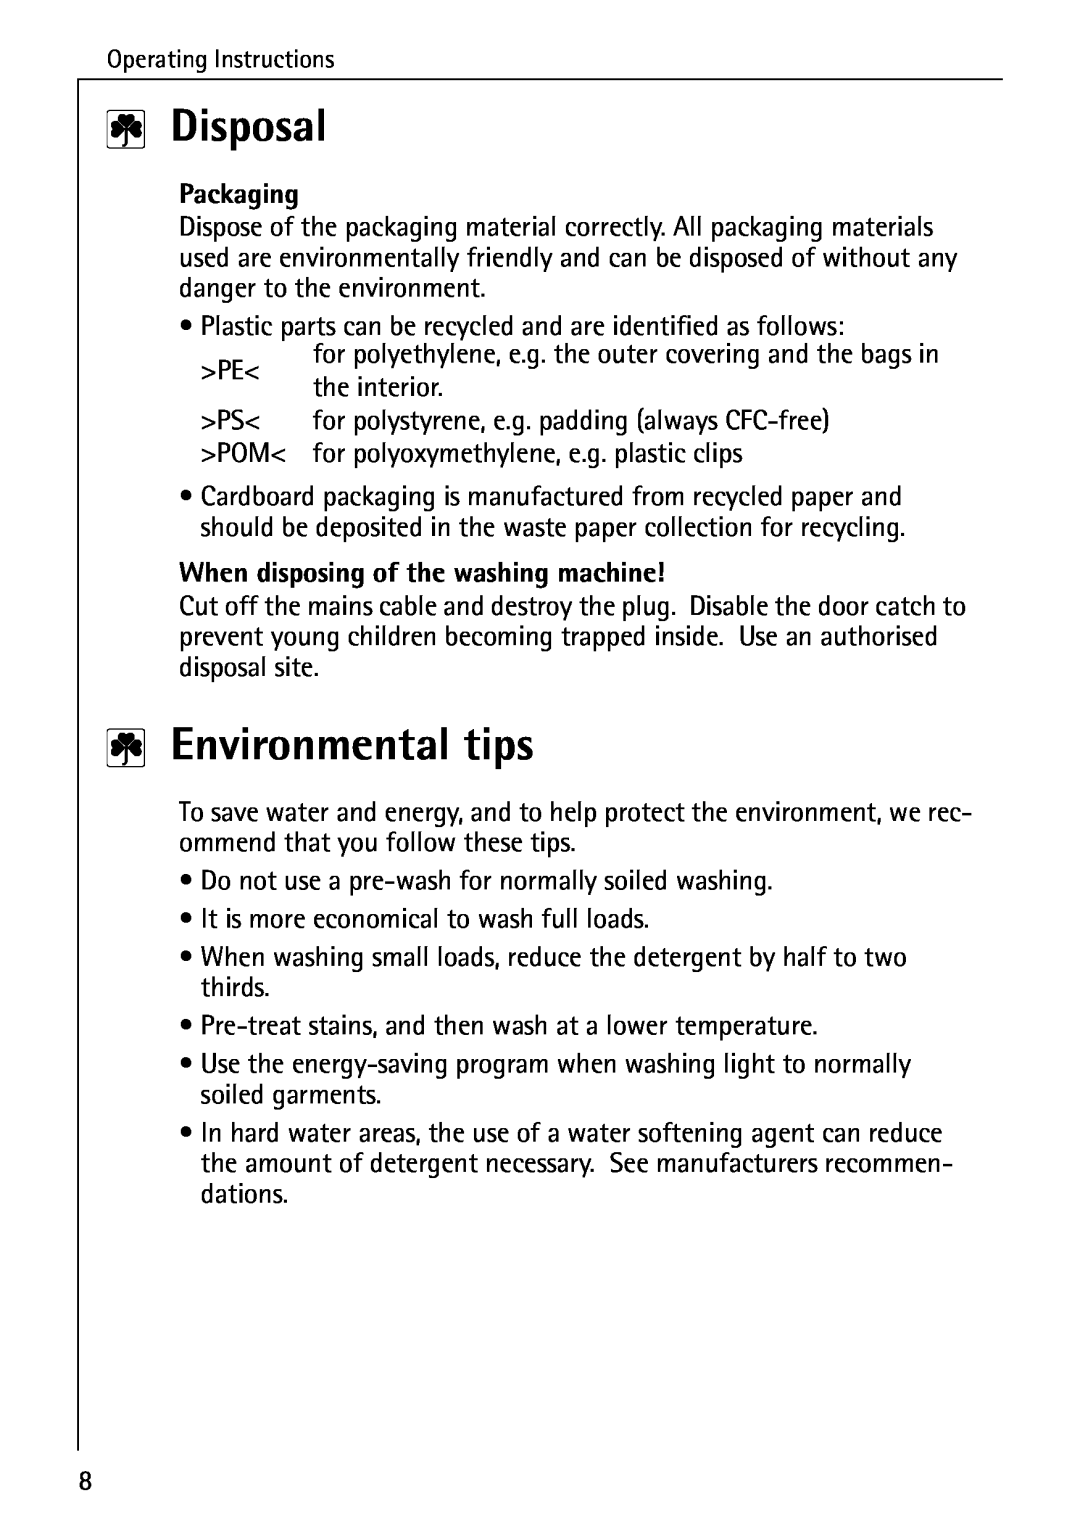 Electrolux 76639 manual Disposal, Environmental tips, Packaging, When disposing of the washing machine 